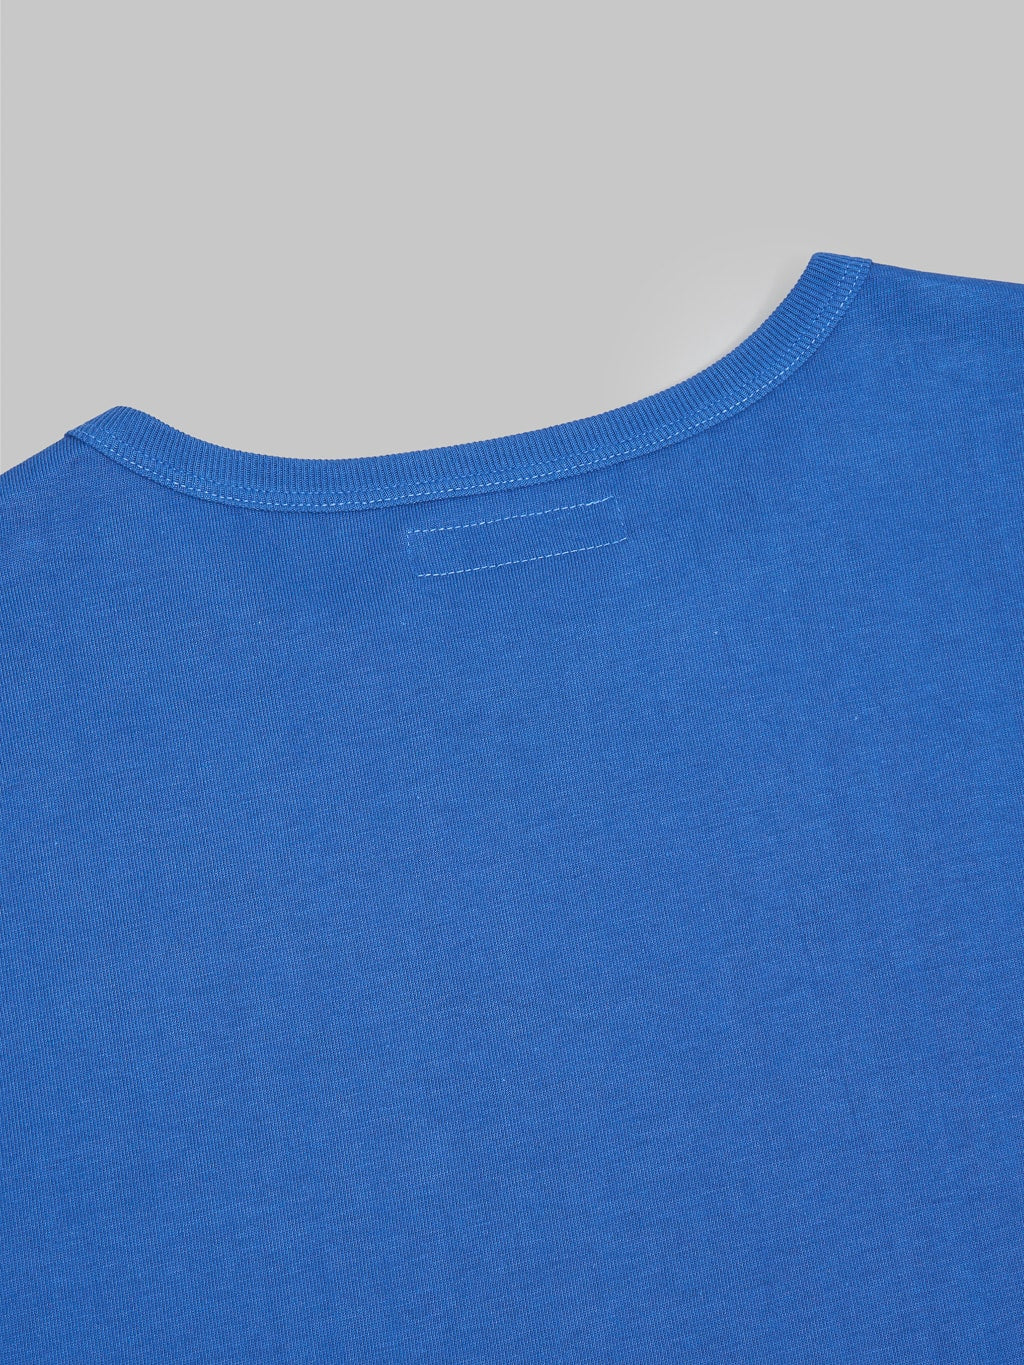 Merz b Schwanen 1950s Loopwheeled Classic TShirt vintage blue classic stitching